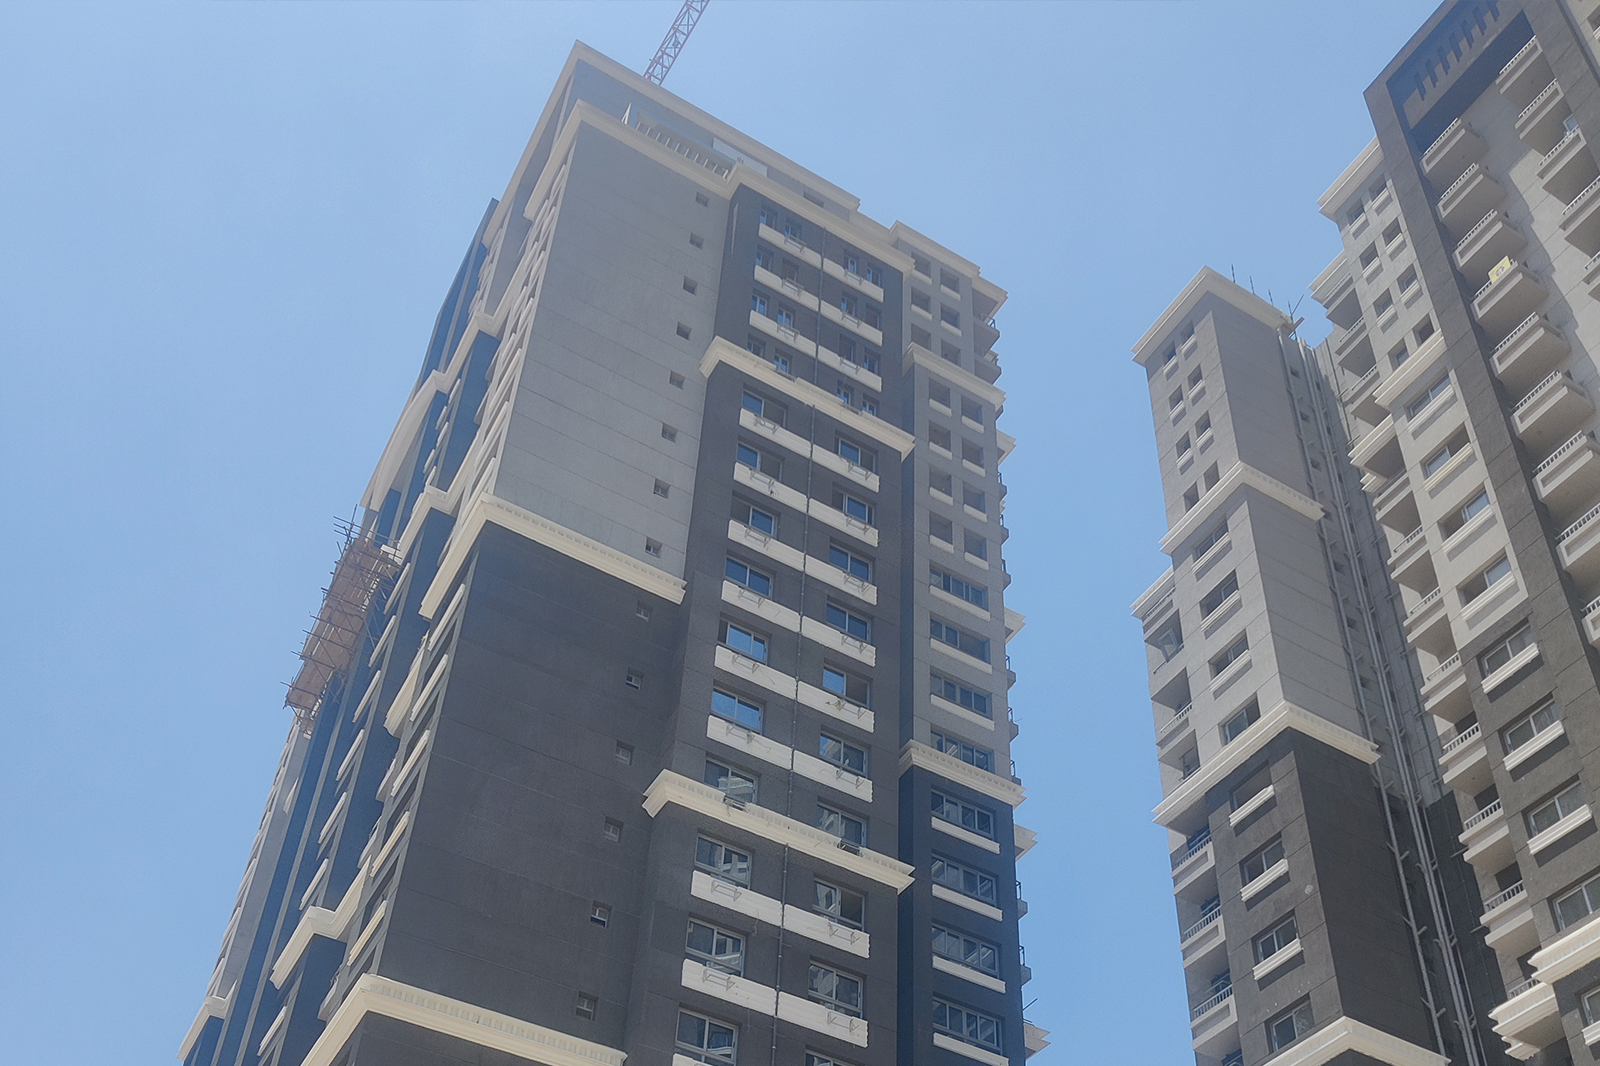 Maspero Business Towersconstructions